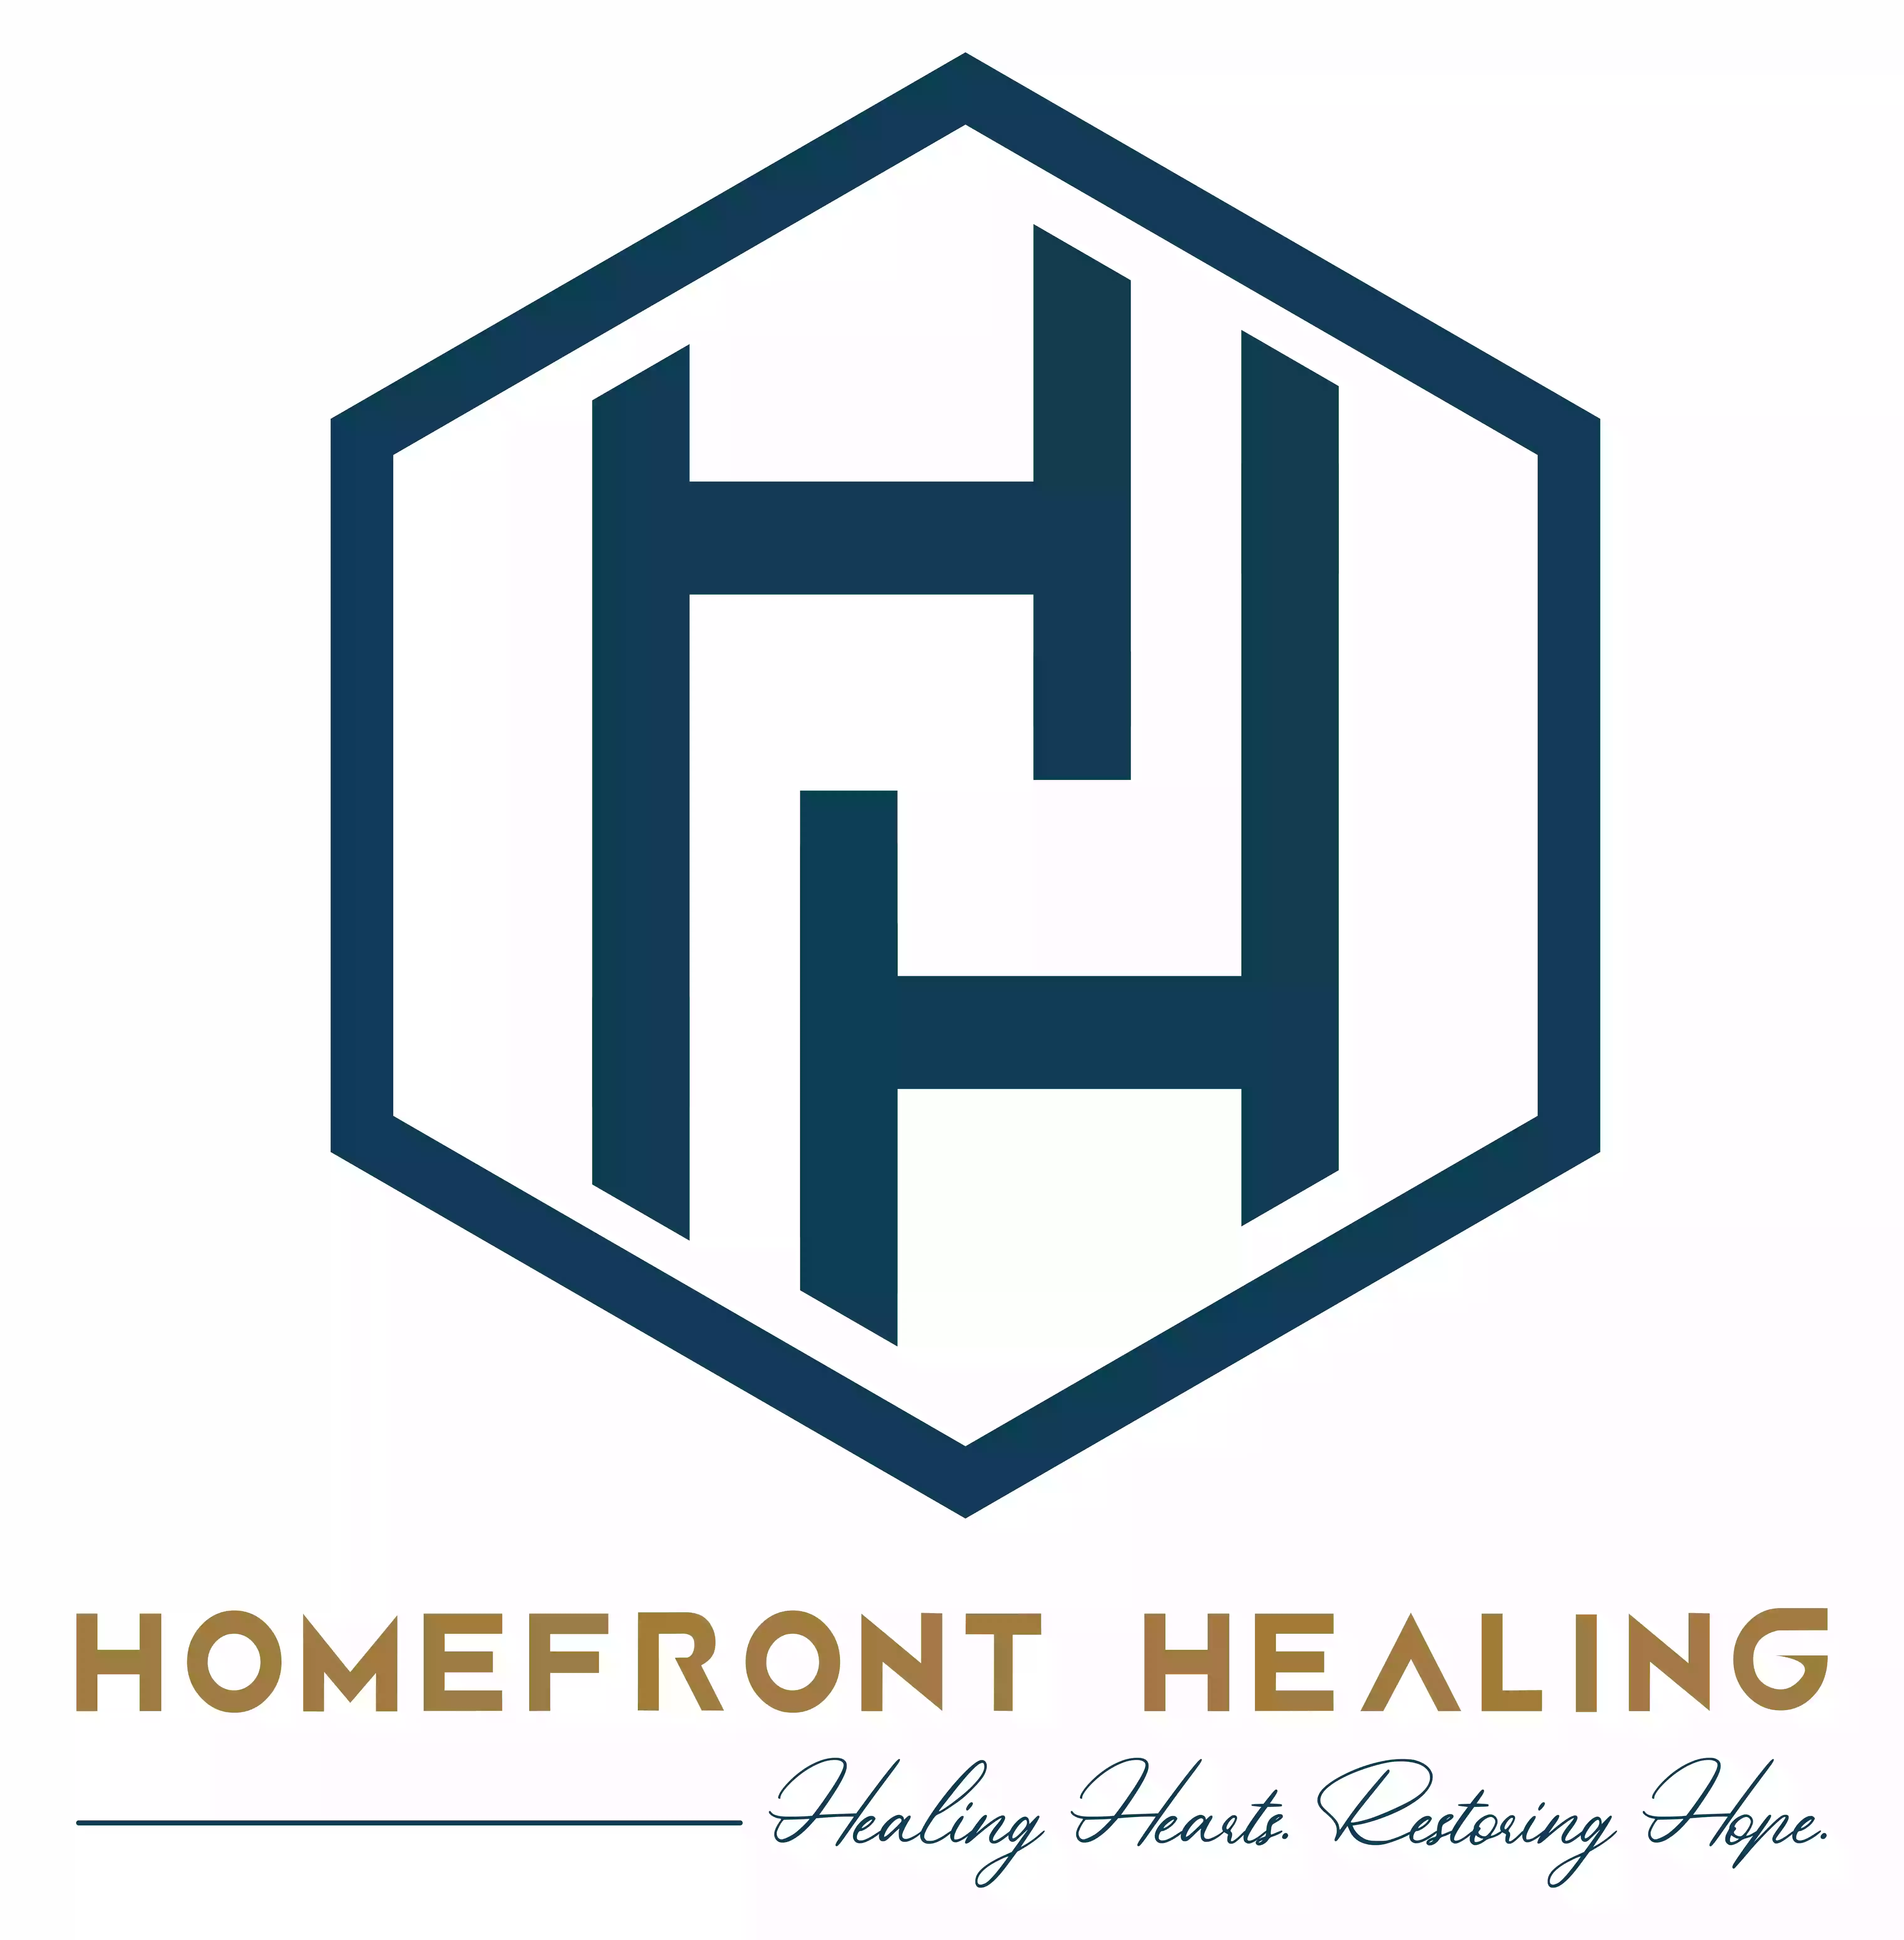 Homefront Healing